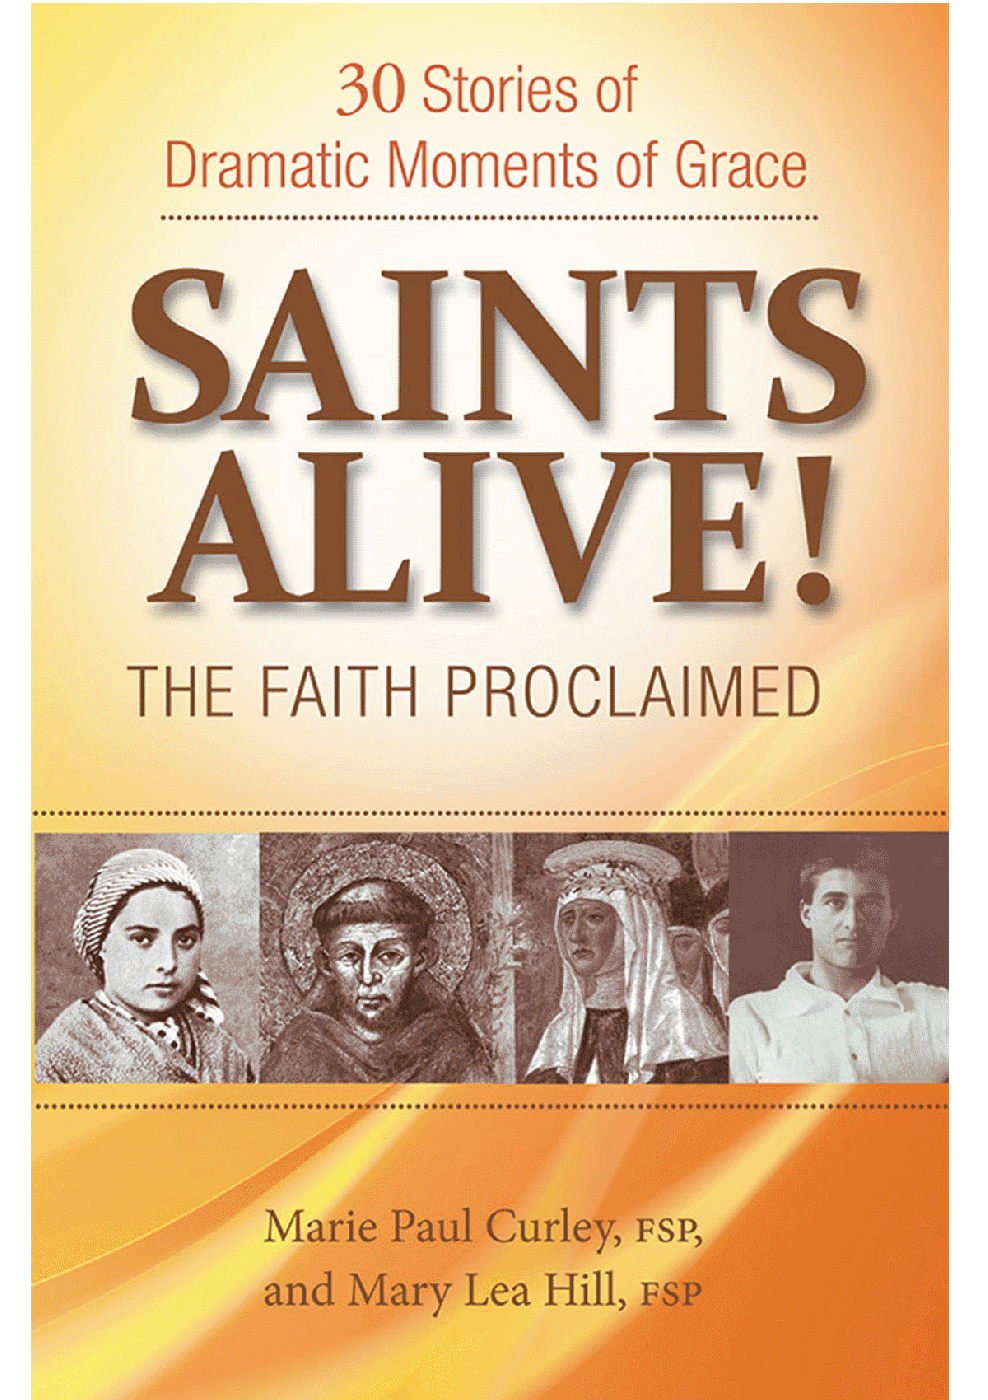 Saints Alive! The Faith Proclained